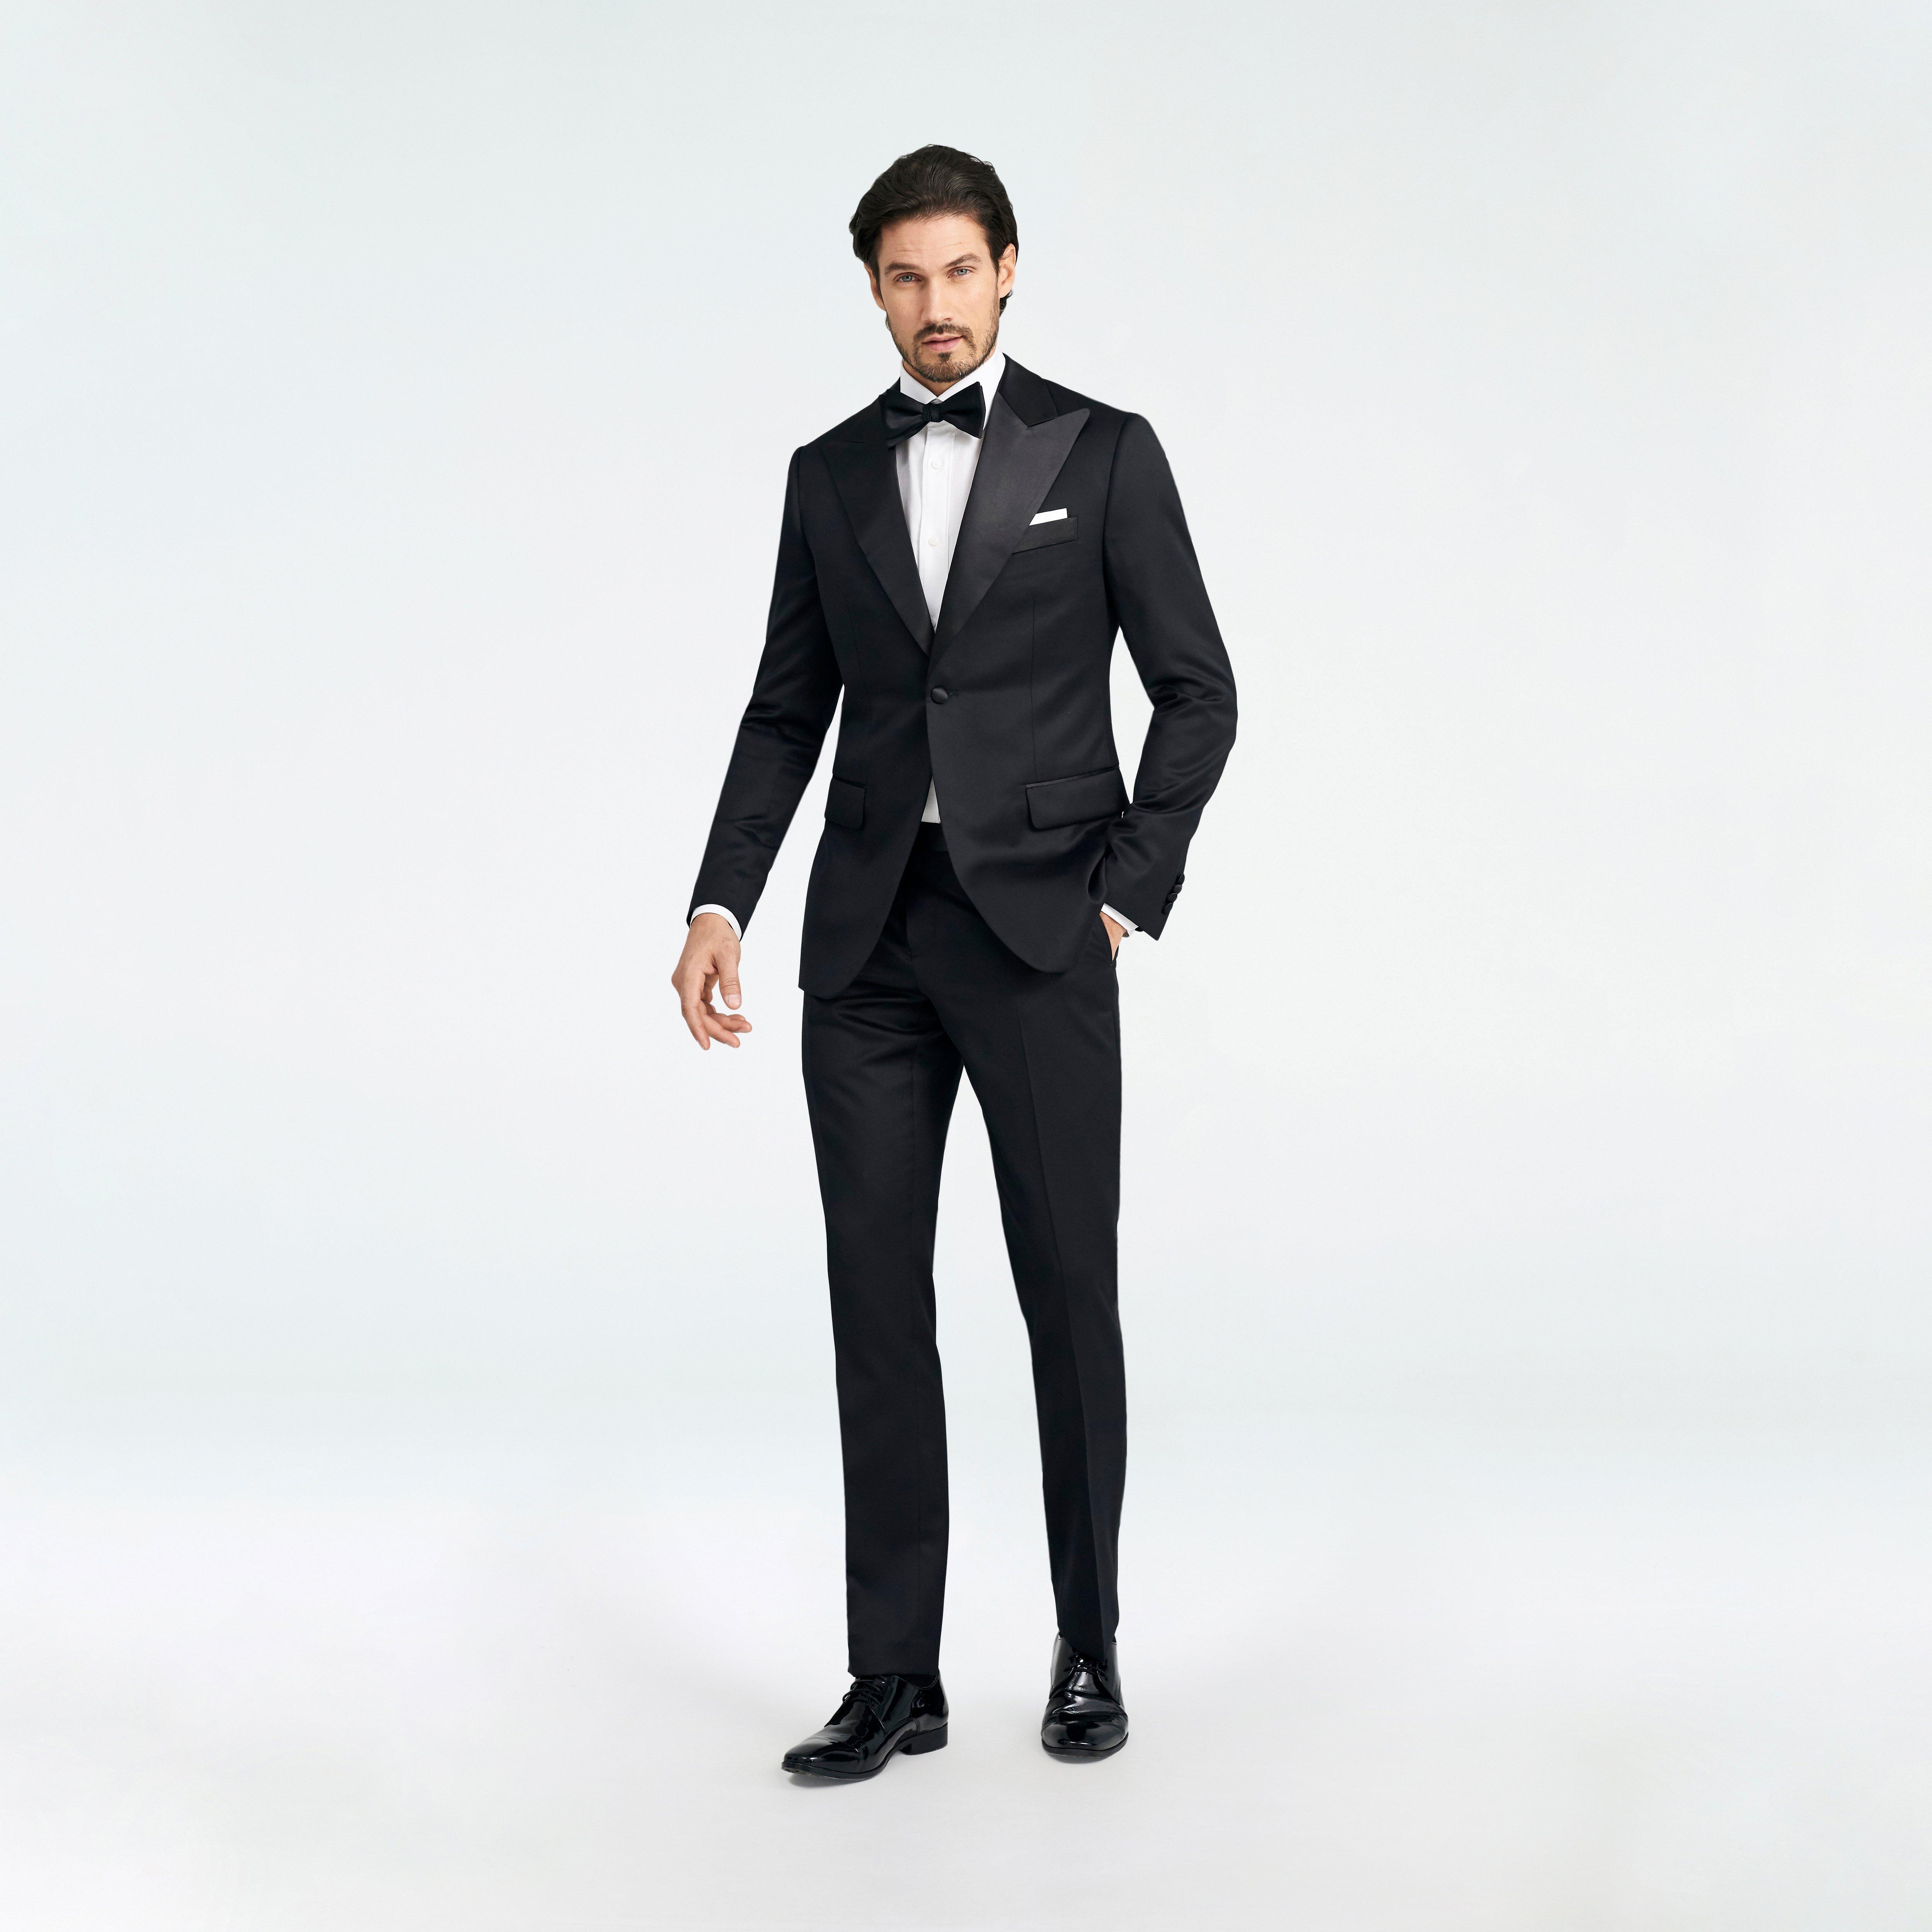 Custom Suits Made For You - Hampton Black Tuxedo | INDOCHINO